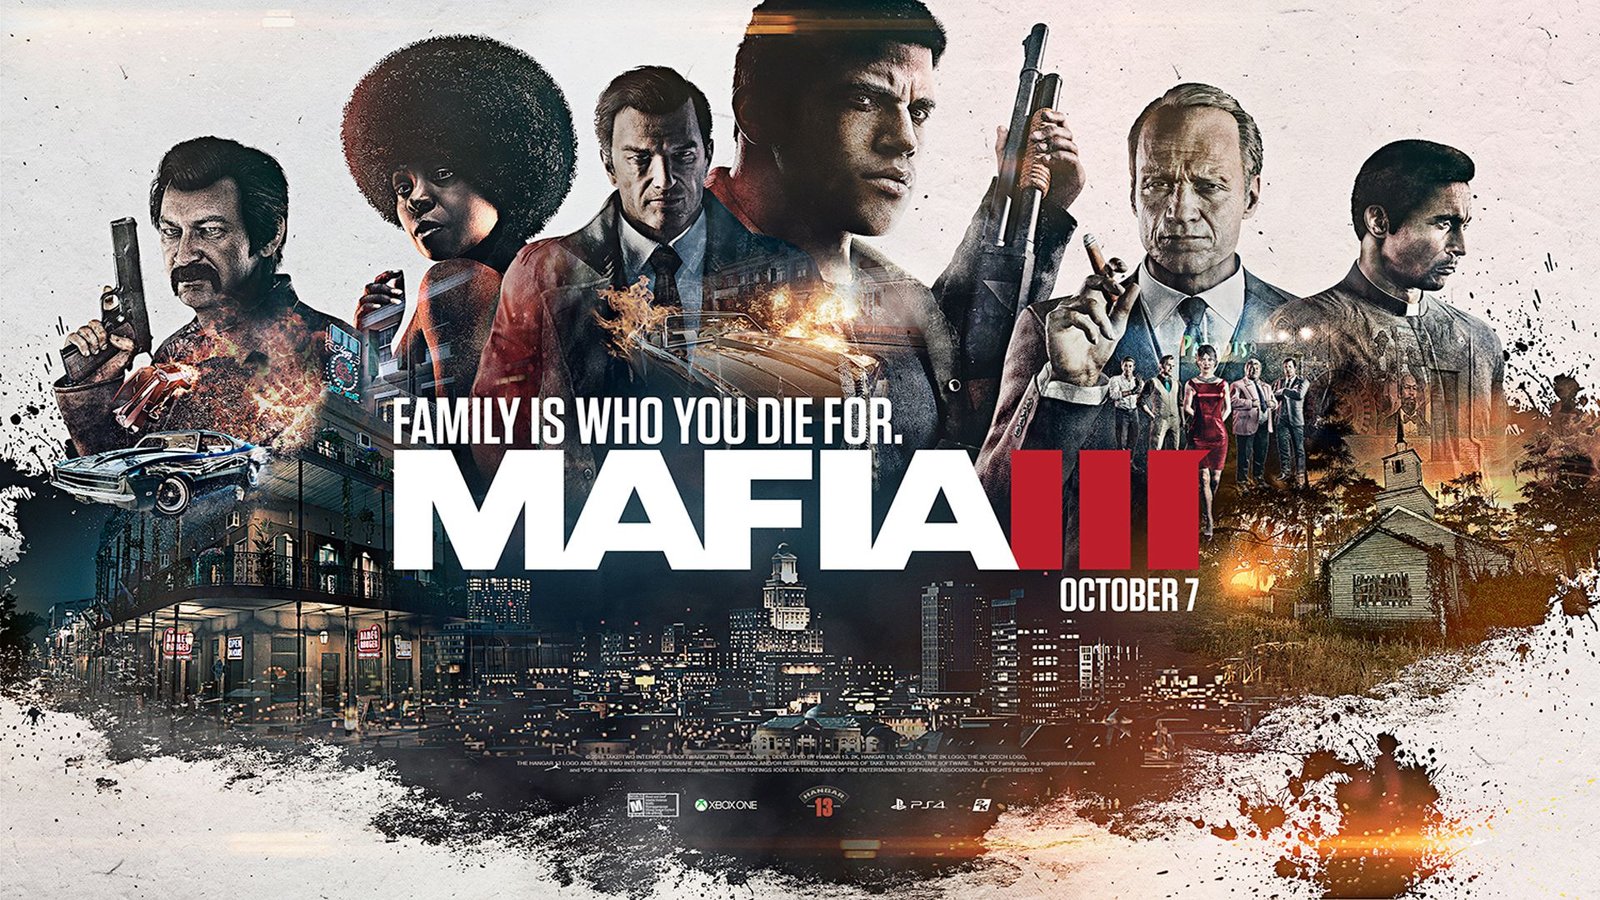  Mafia III - PlayStation 4 : Take 2 Interactive